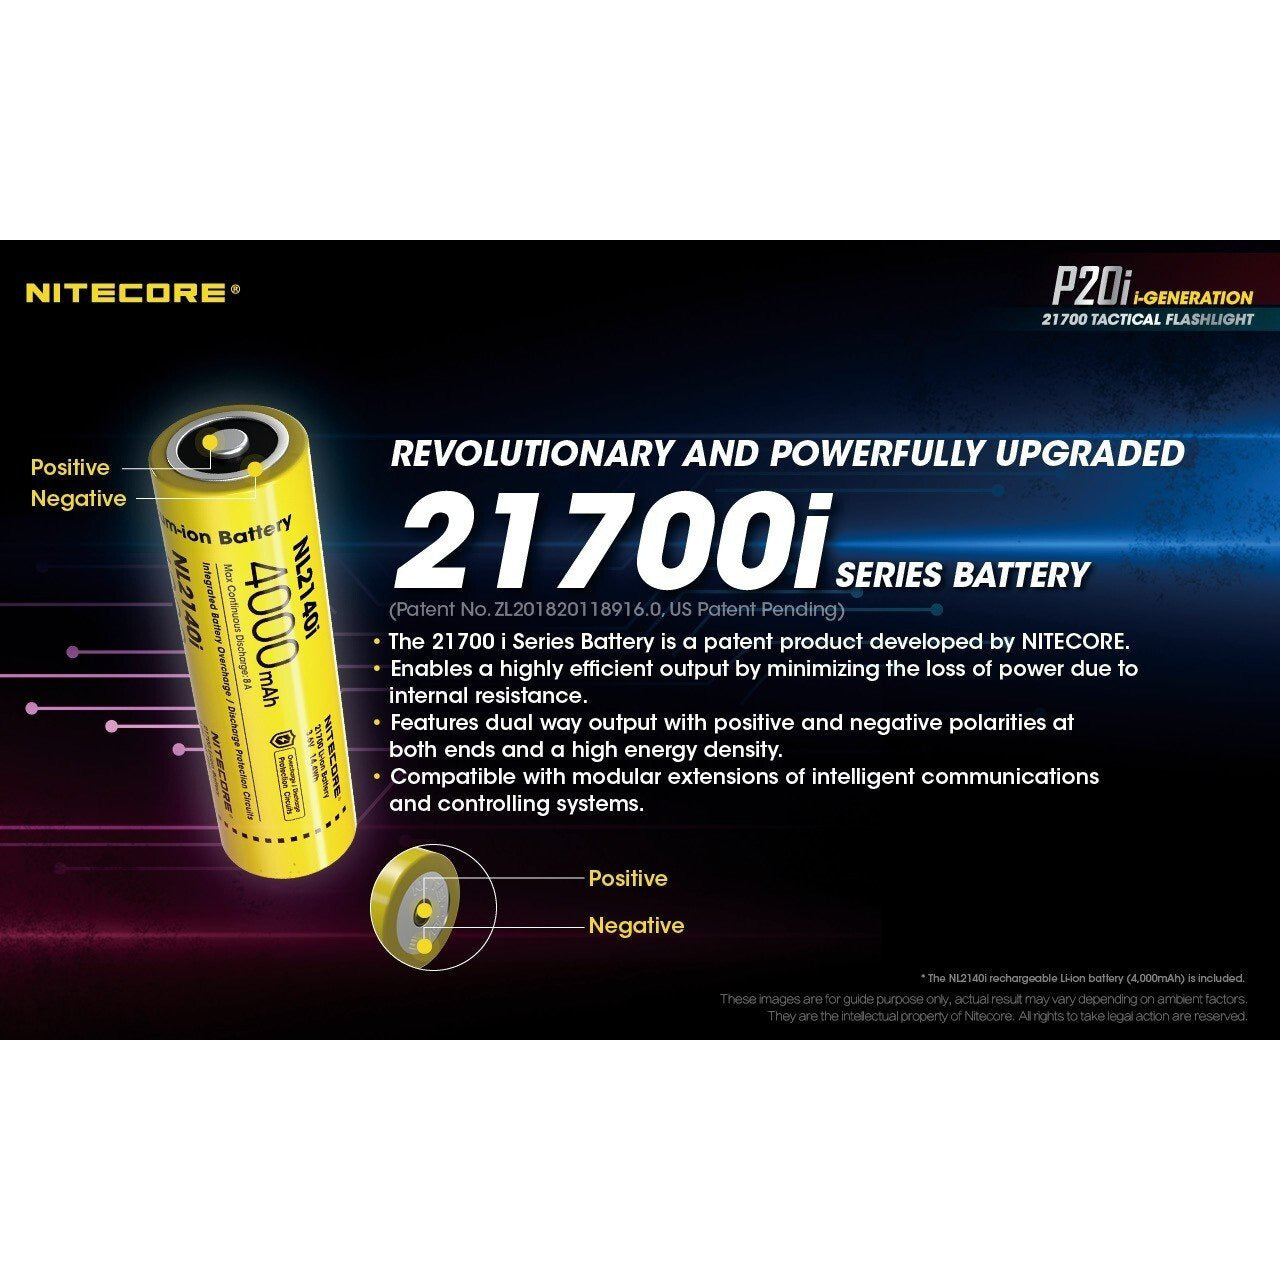 Nitecore Nitecore Compact Rechargeable Tactical Flashlight Torch - 1800 Lumen Strobe Ready W Battery #p20I Light Goldenrod